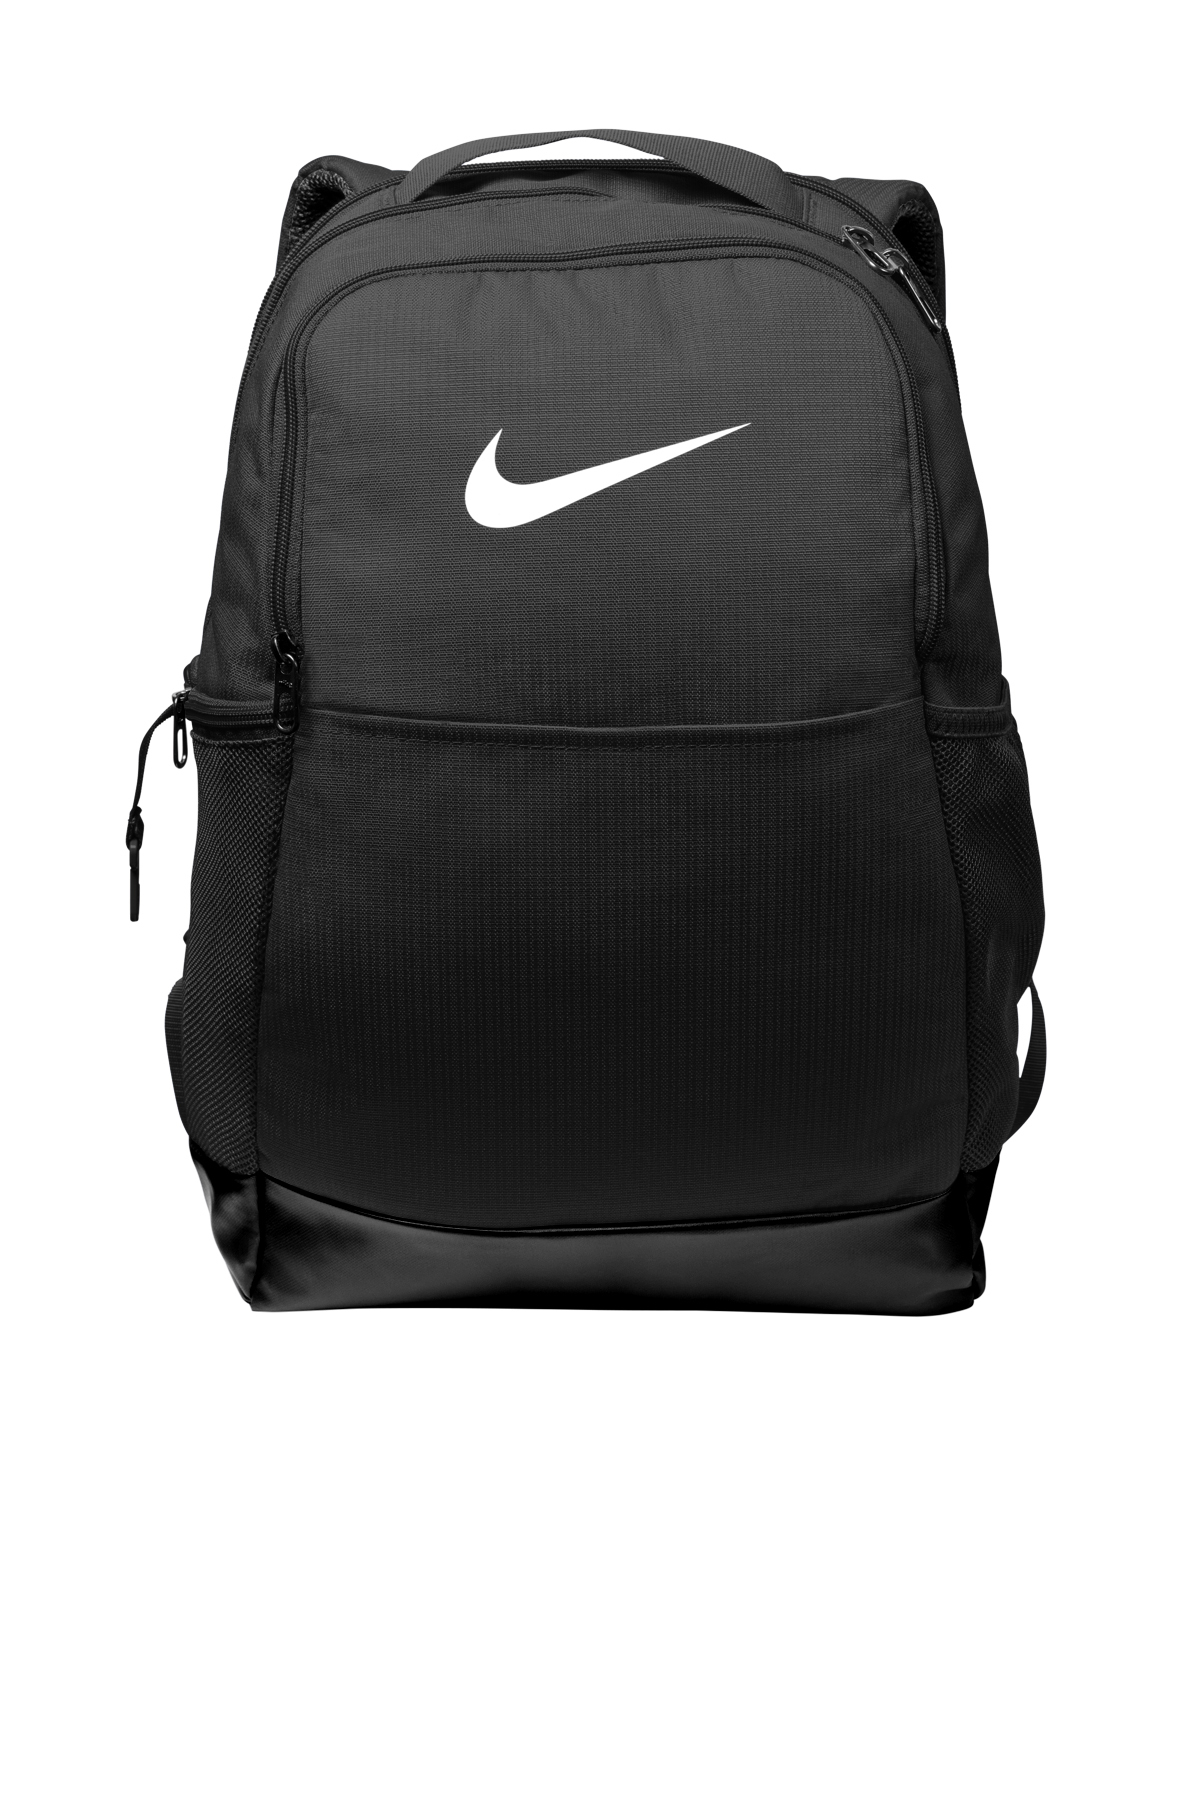 sed calculadora Refinamiento Nike Brasilia Medium Backpack | Product | SanMar